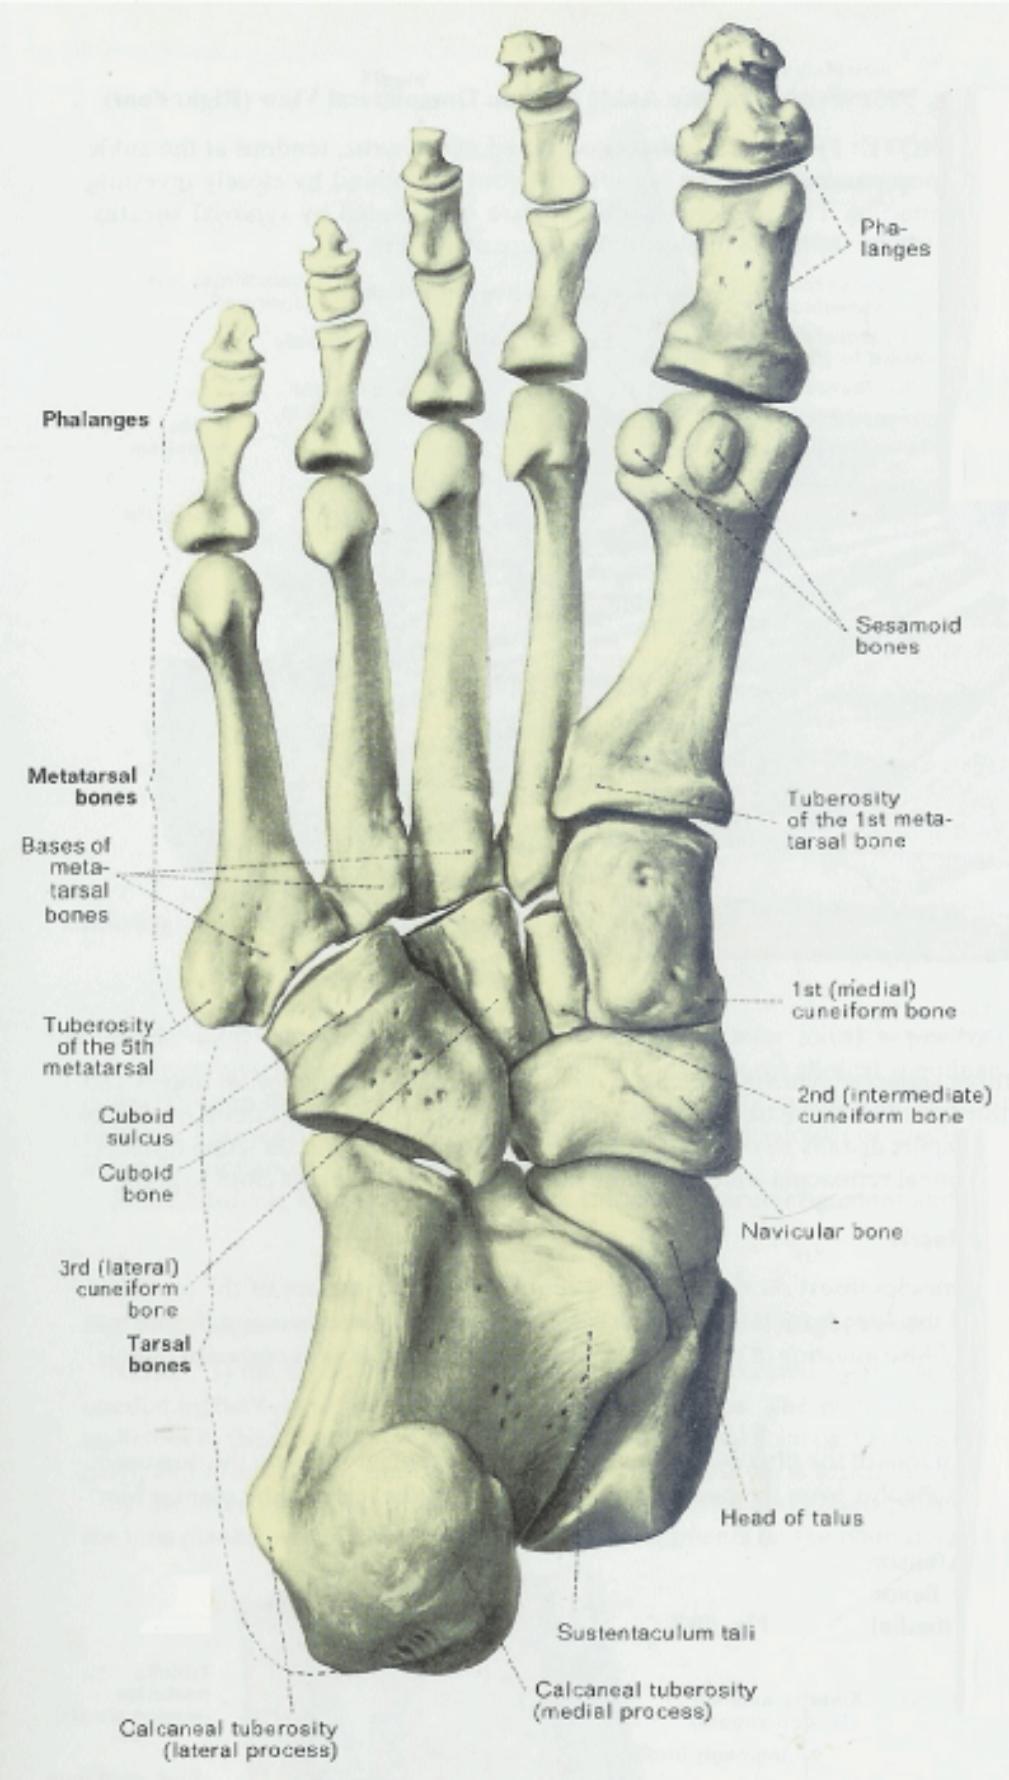 right foot bones